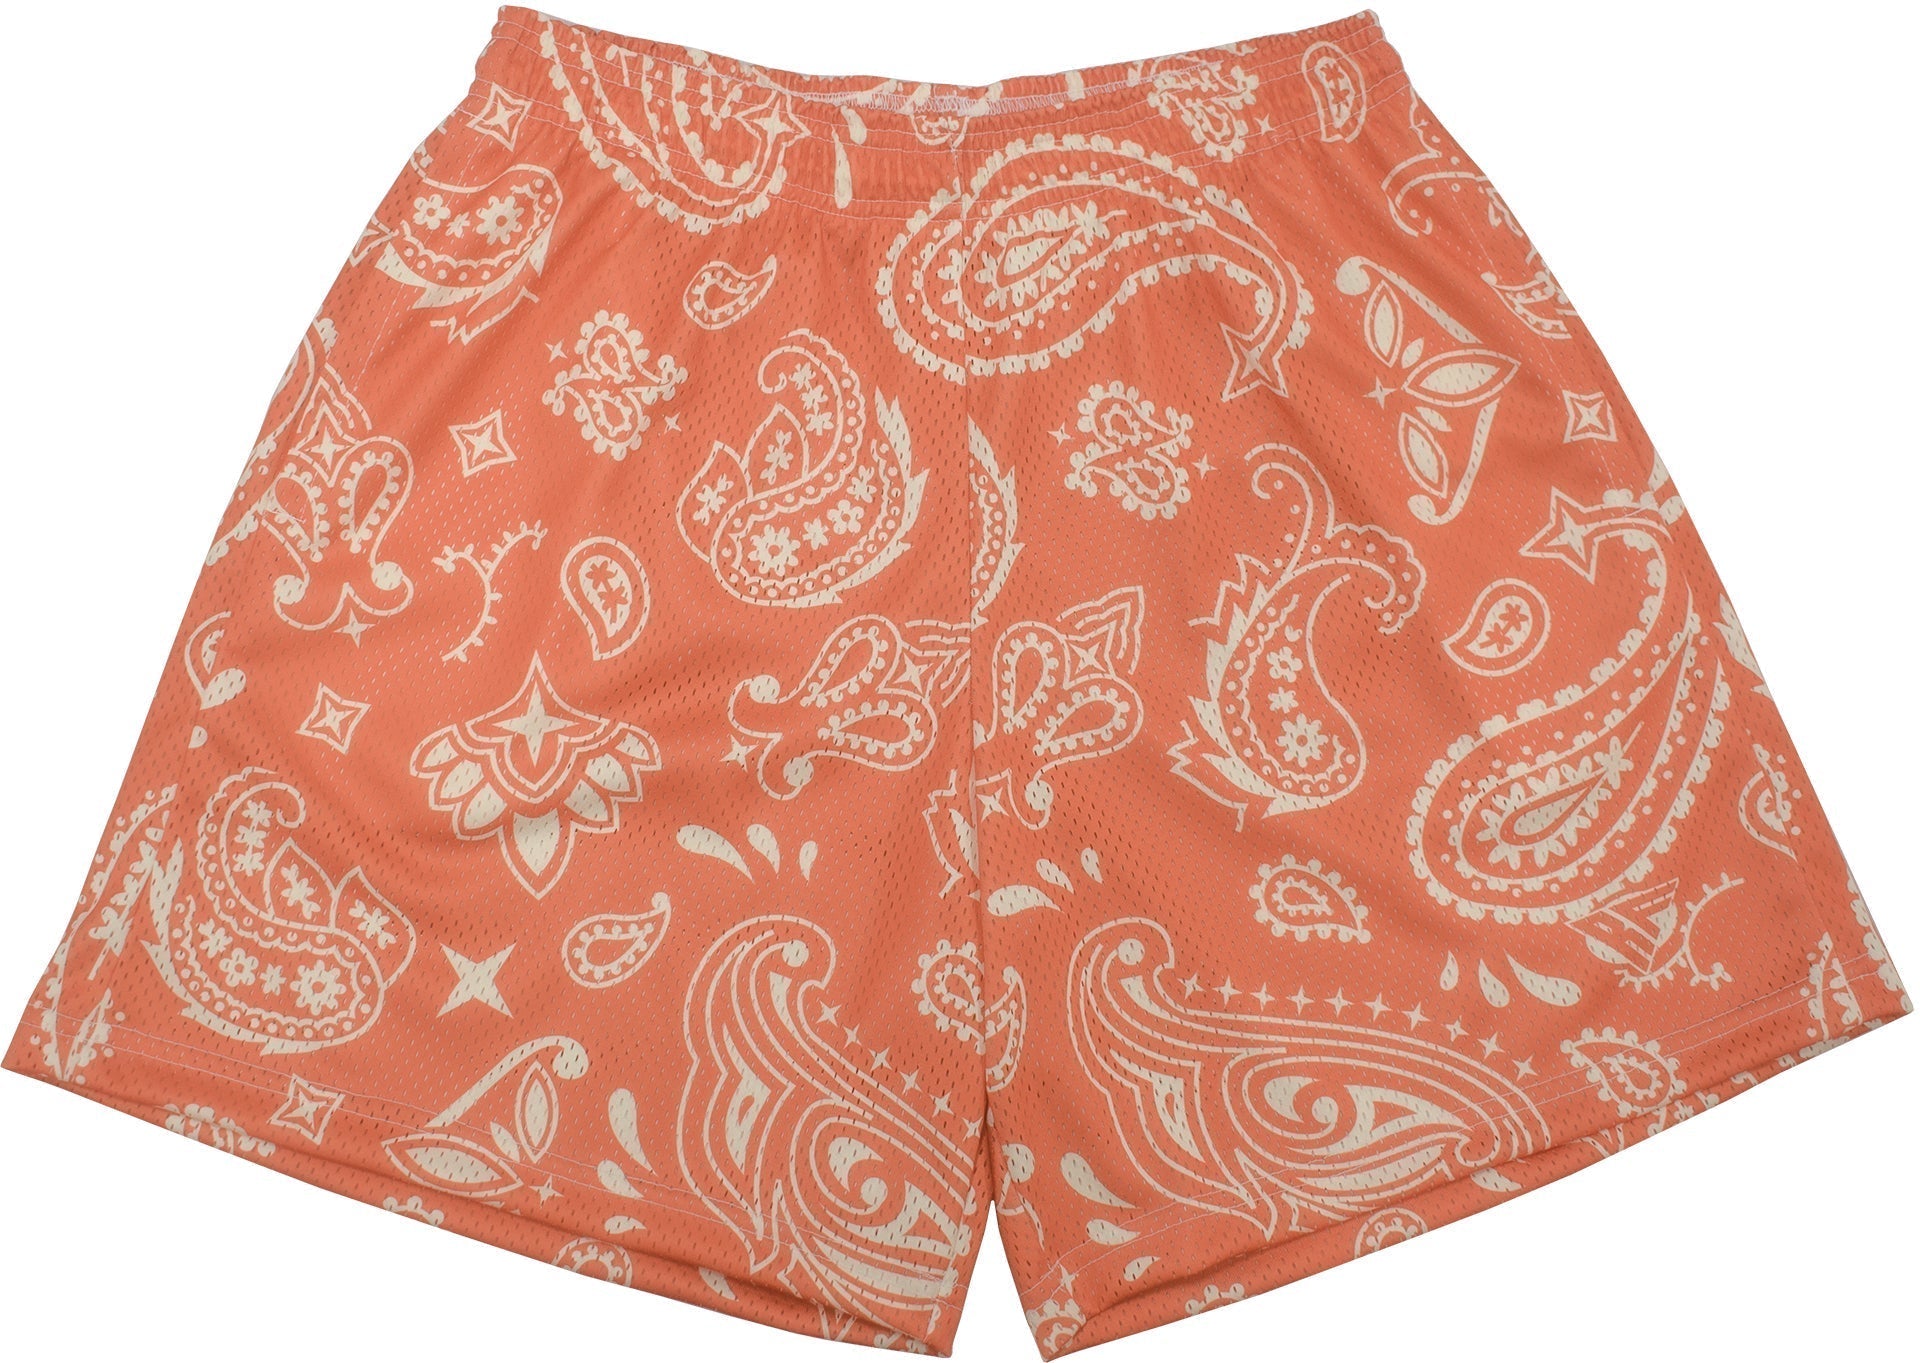 RF Mesh Fall Paisley Shorts - Apricot / Cream